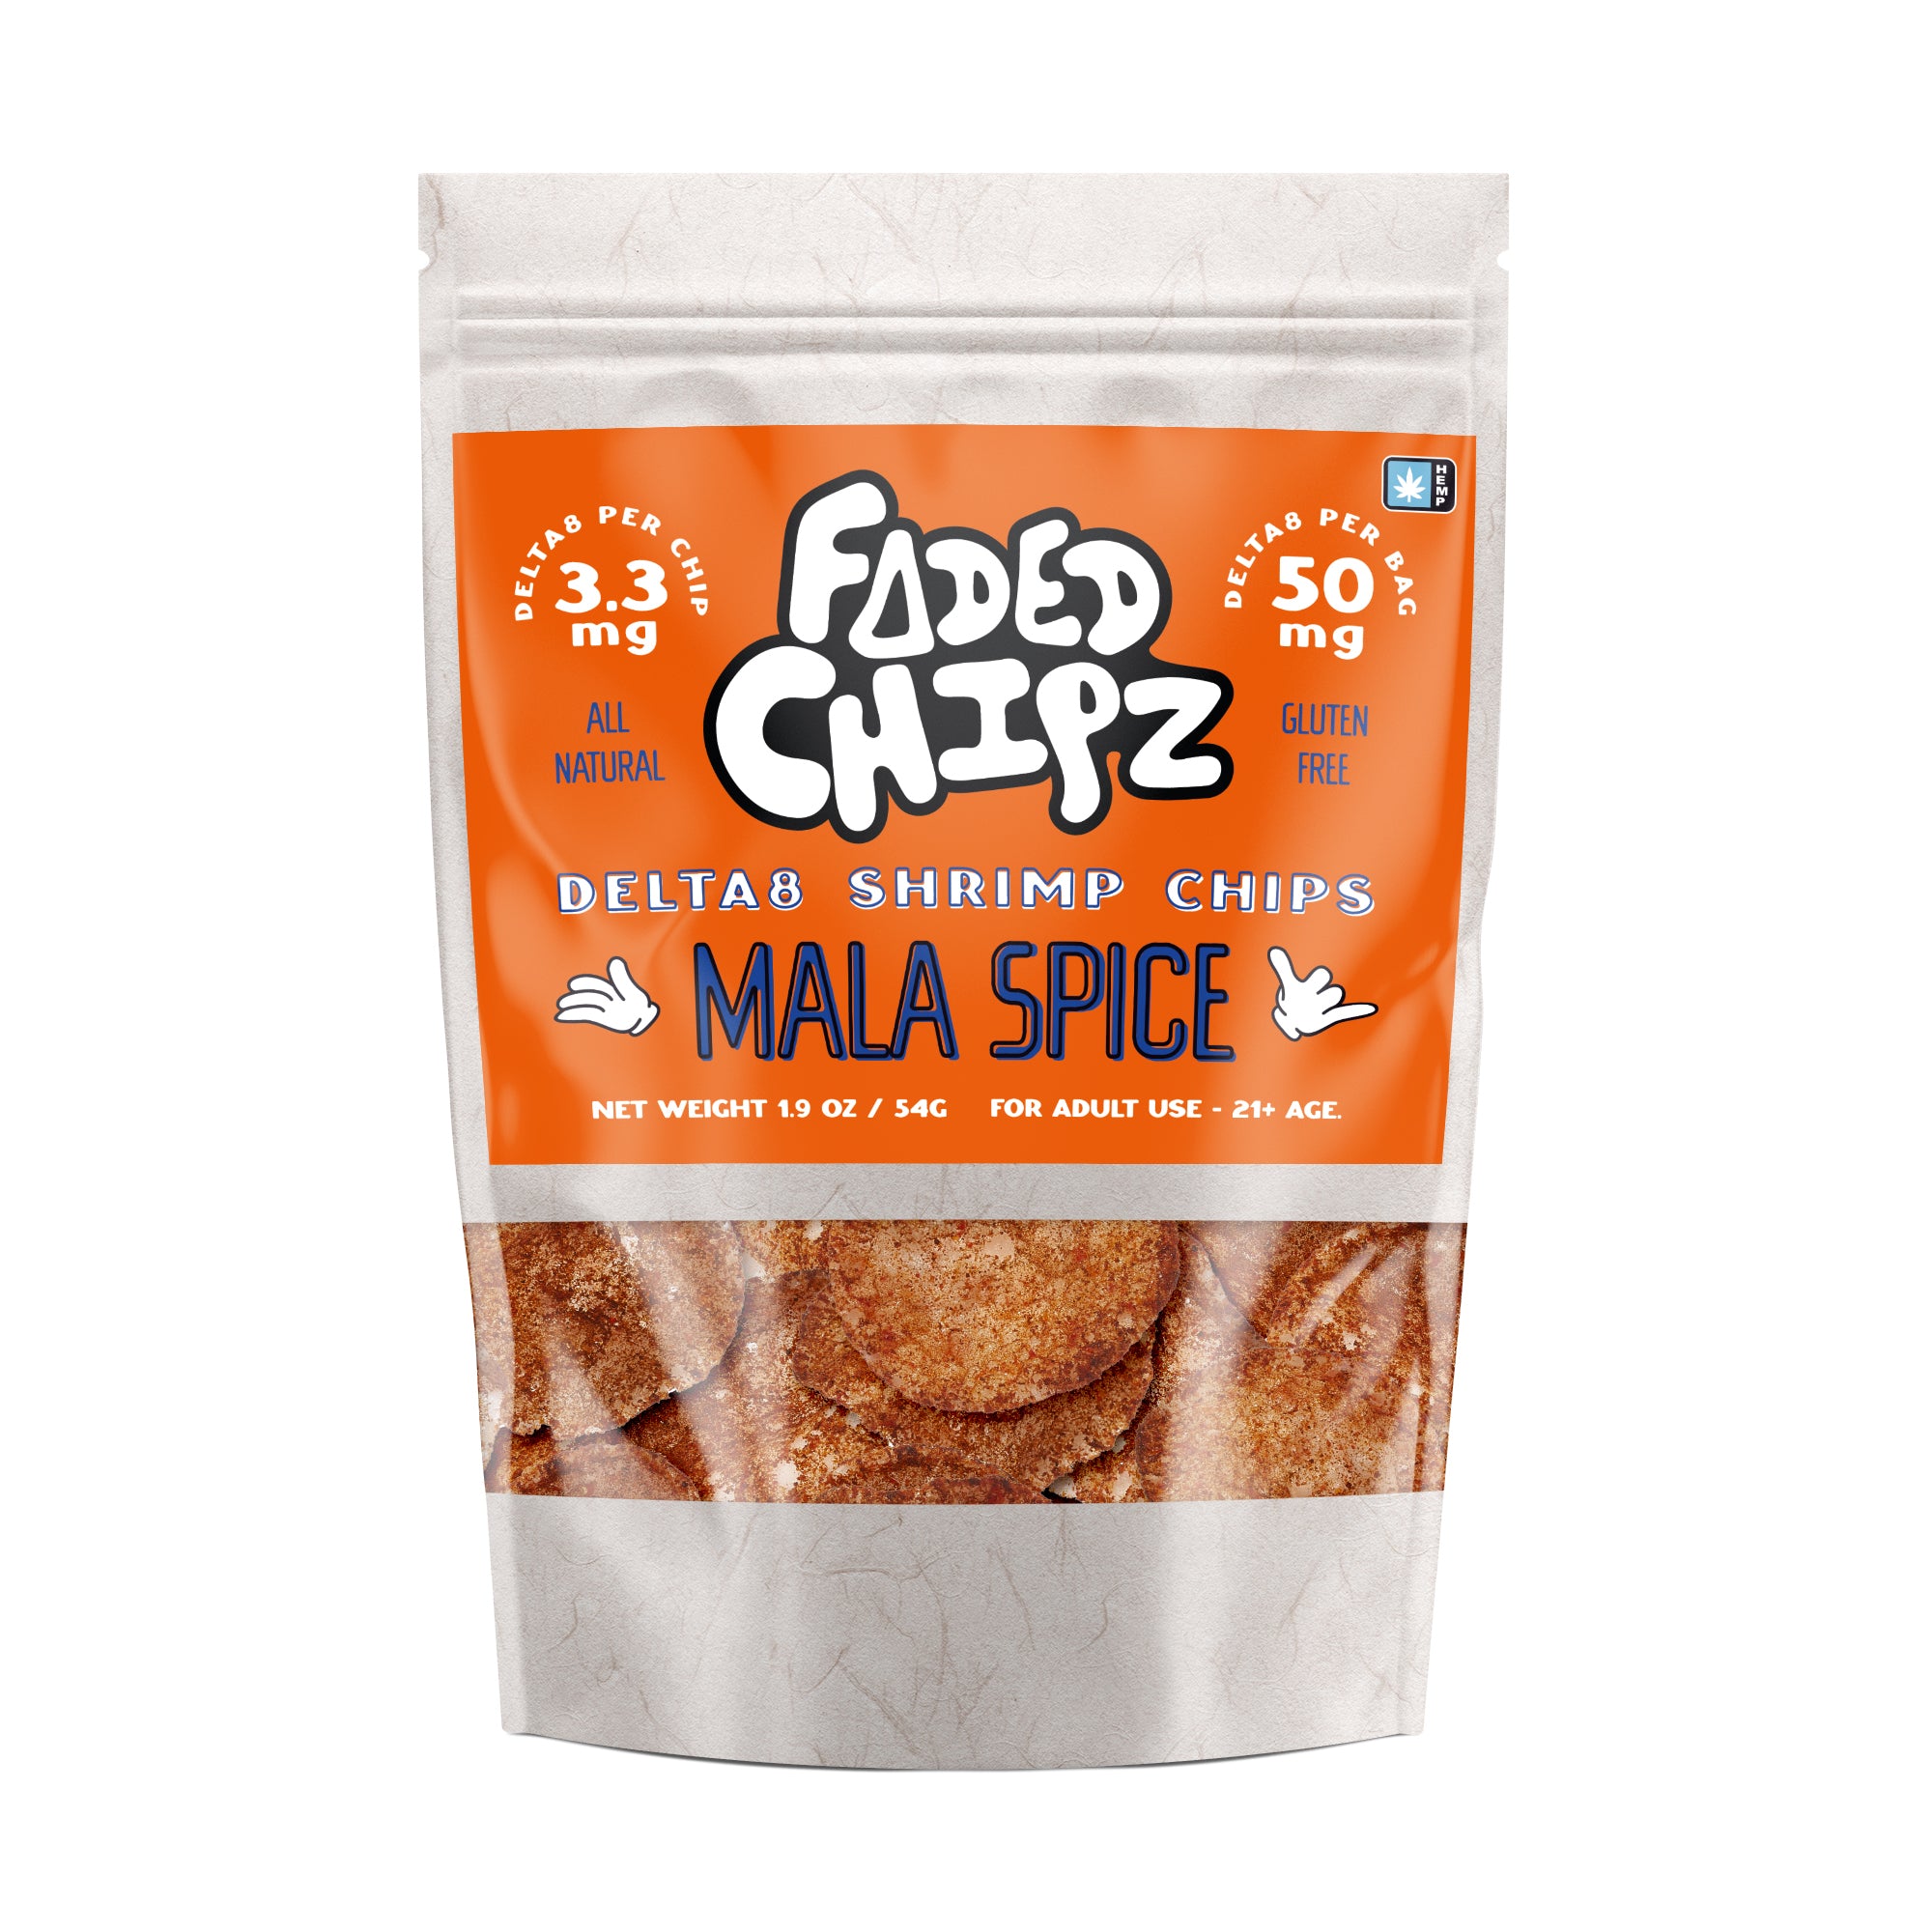 Faded Chipz Delta 8 Shrimp Chips 50mg - Mala Spice (25ct)